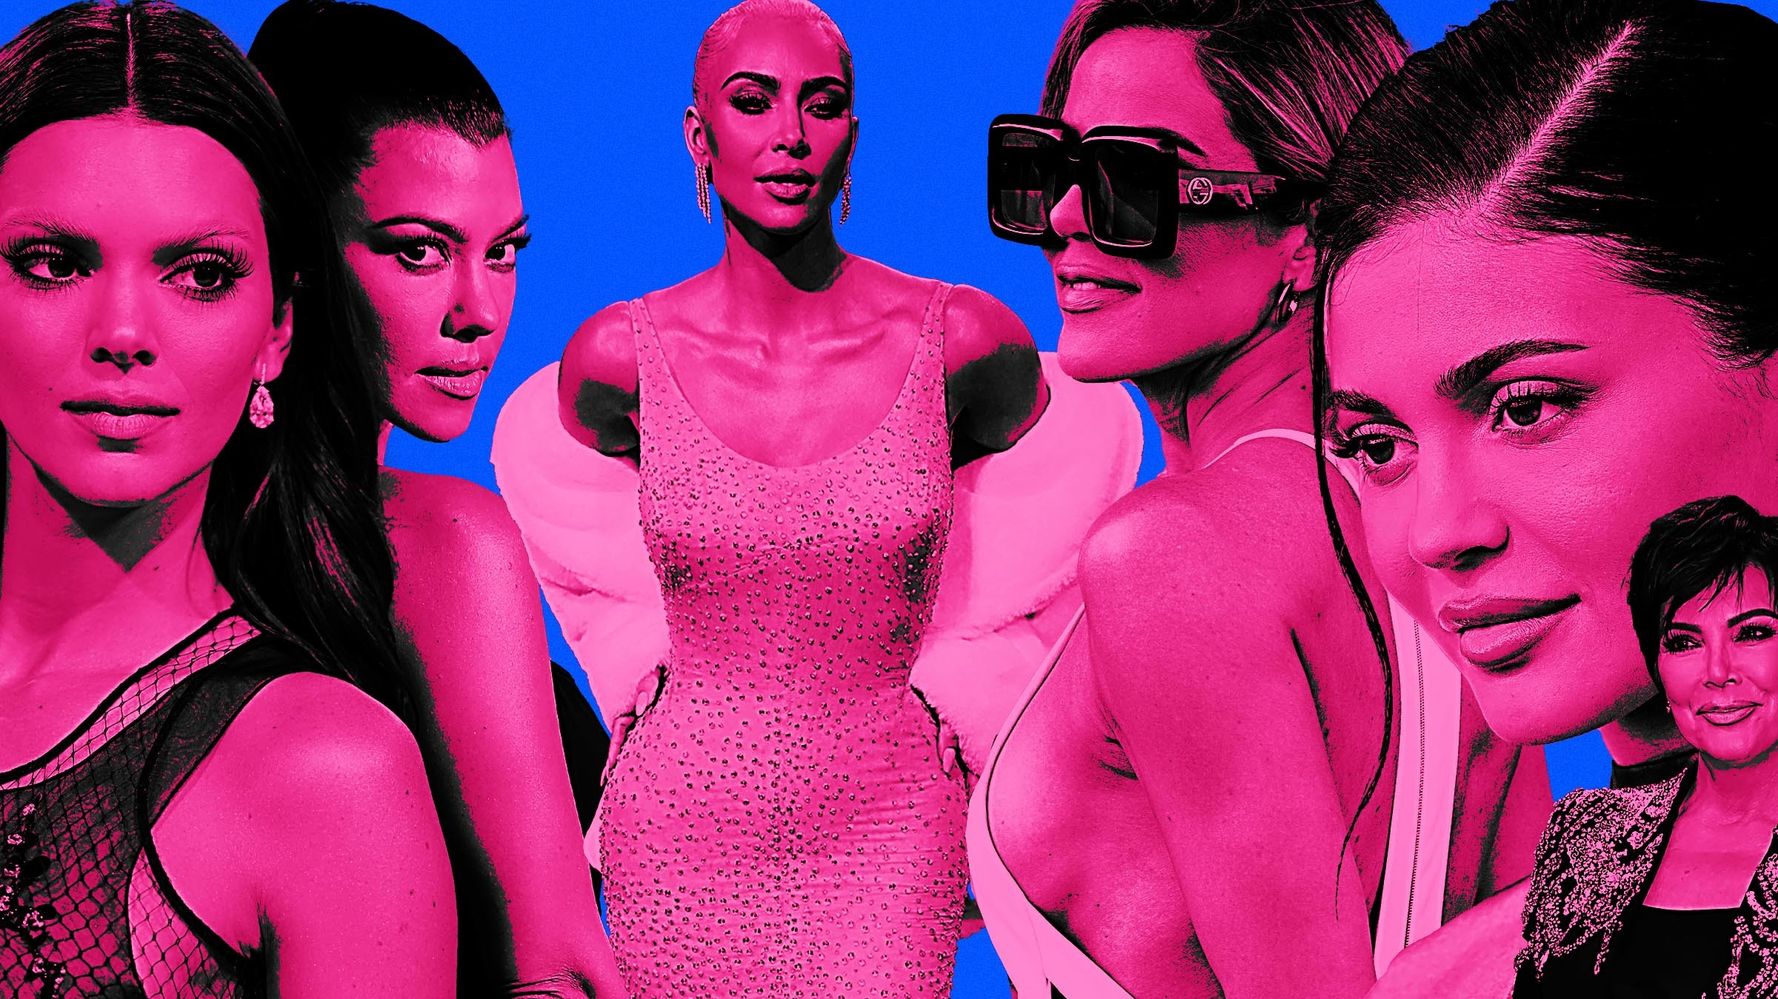 Kim Kardashian's 'slim-thick' body type more harmful: New study